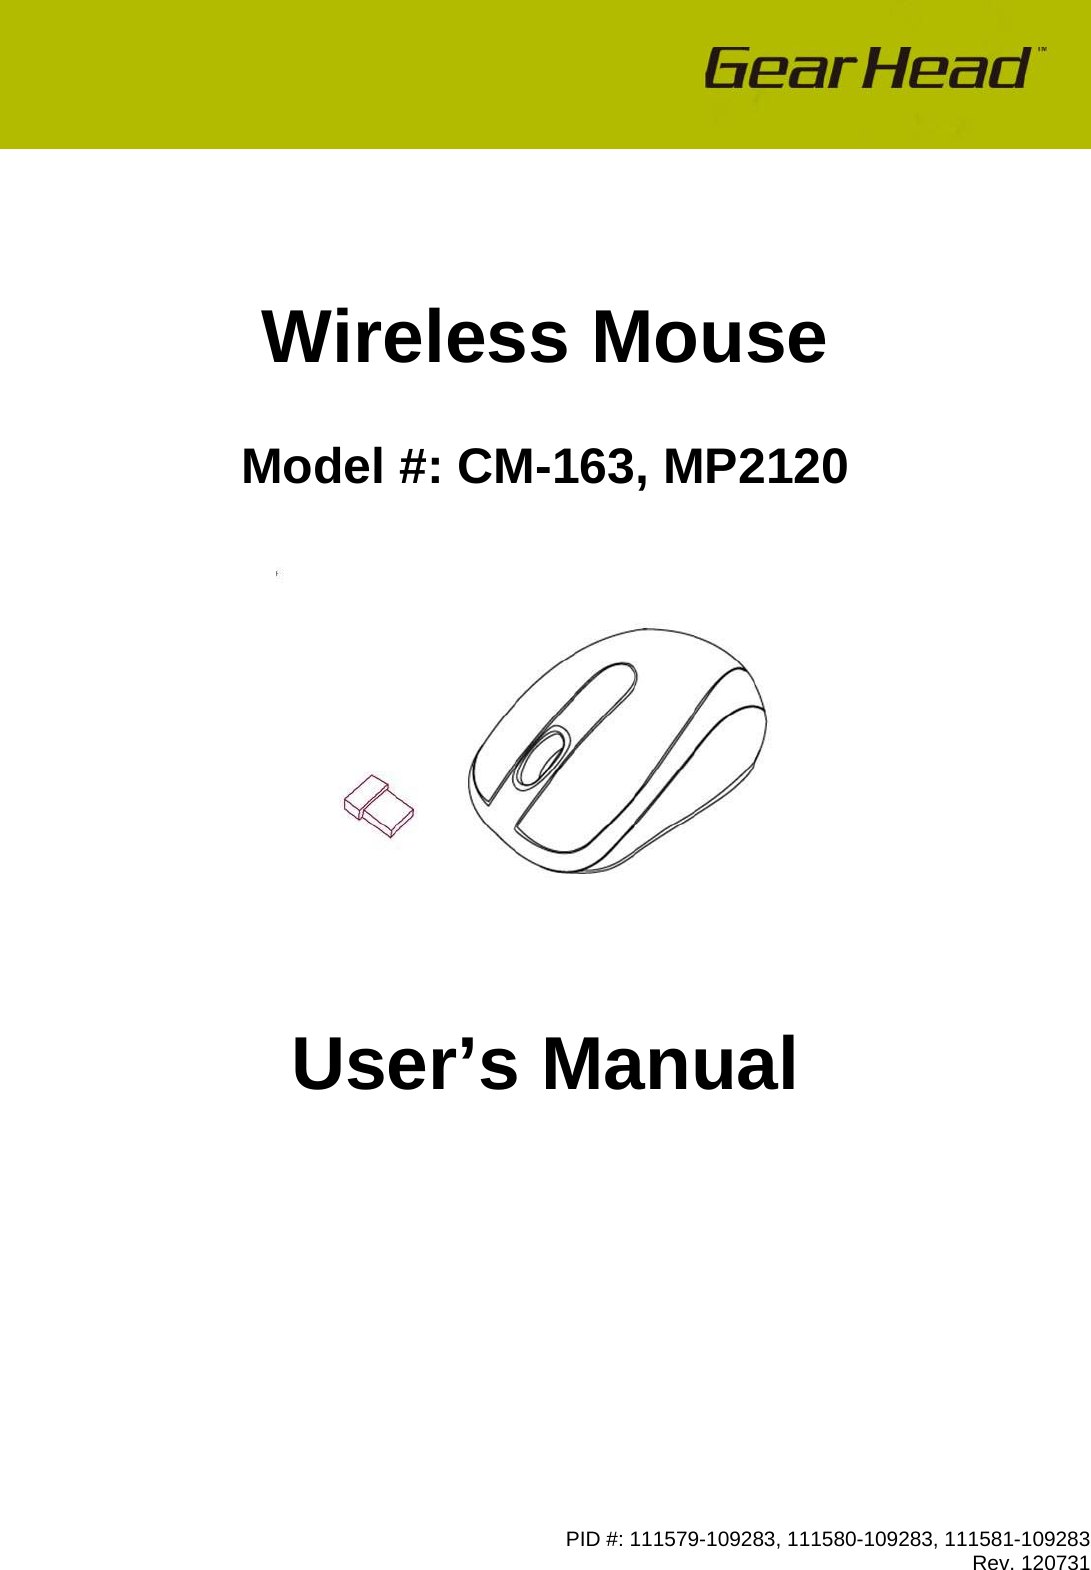 PID #: 111579-109283, 111580-109283, 111581-109283 Rev. 120731        Wireless Mouse   Model #: CM-163, MP2120       User’s Manual 